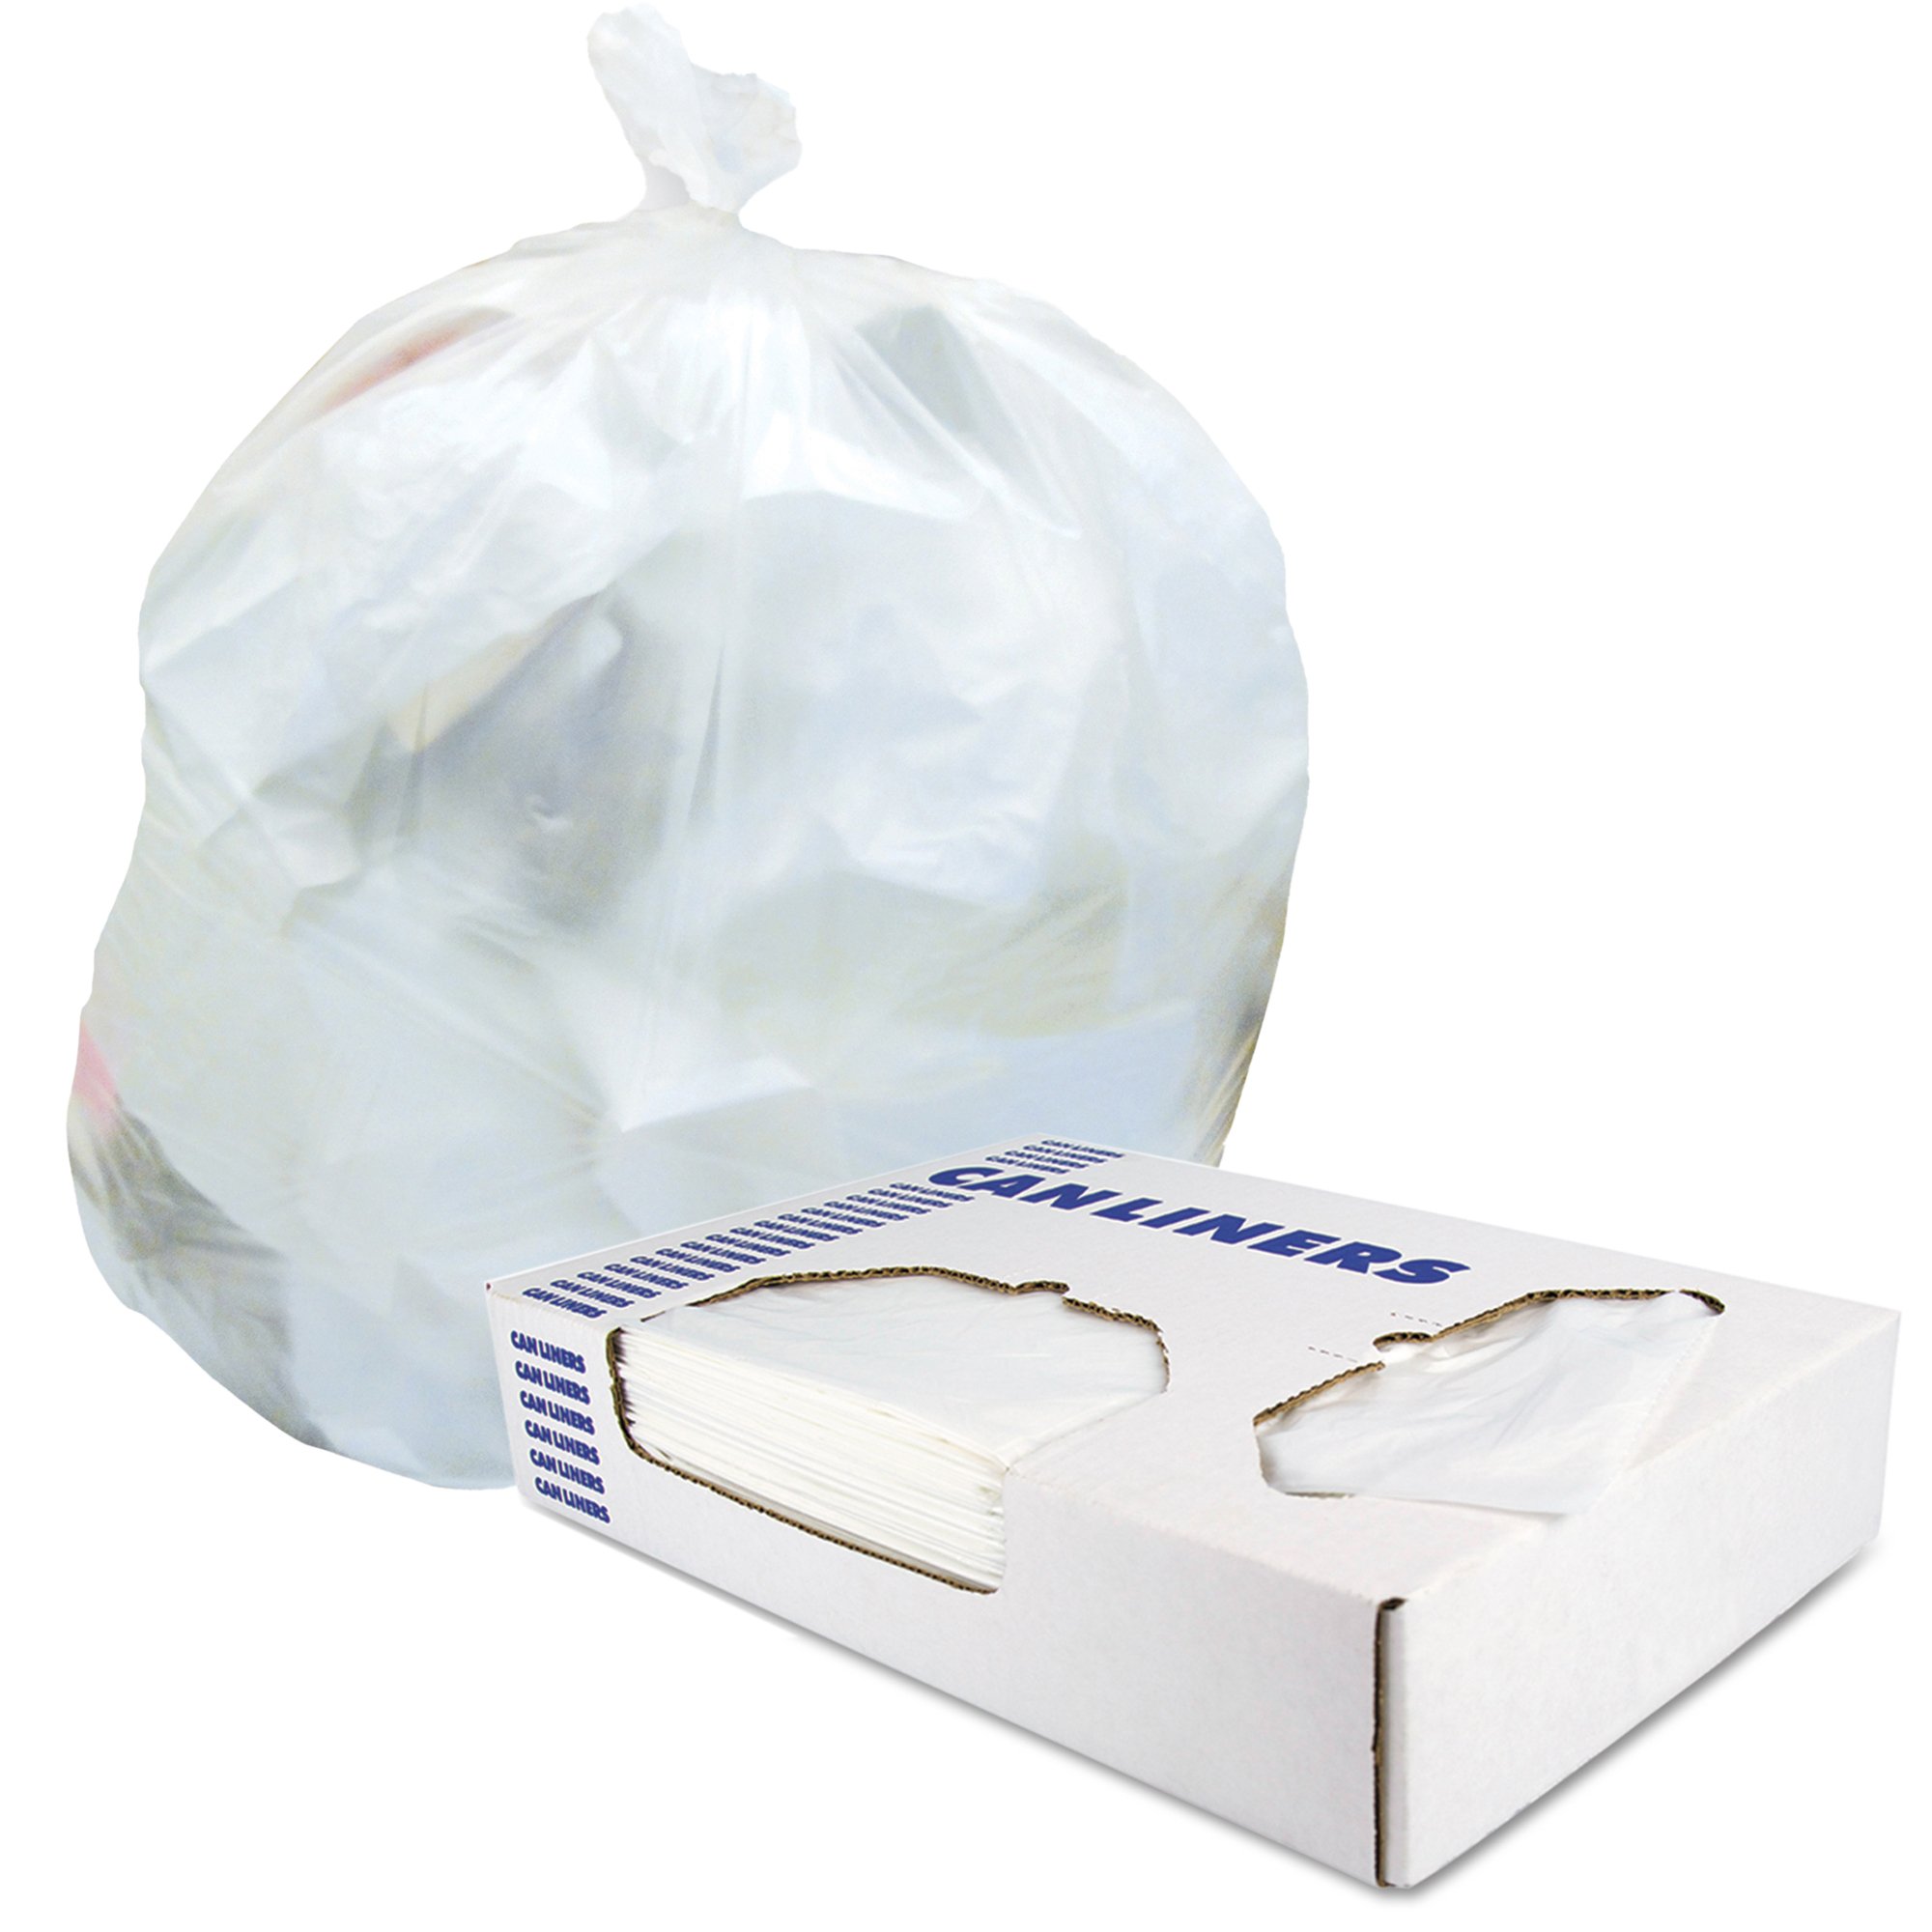 20-30 Gallon Black Regular Duty Trash Bags - 0.65 Mil